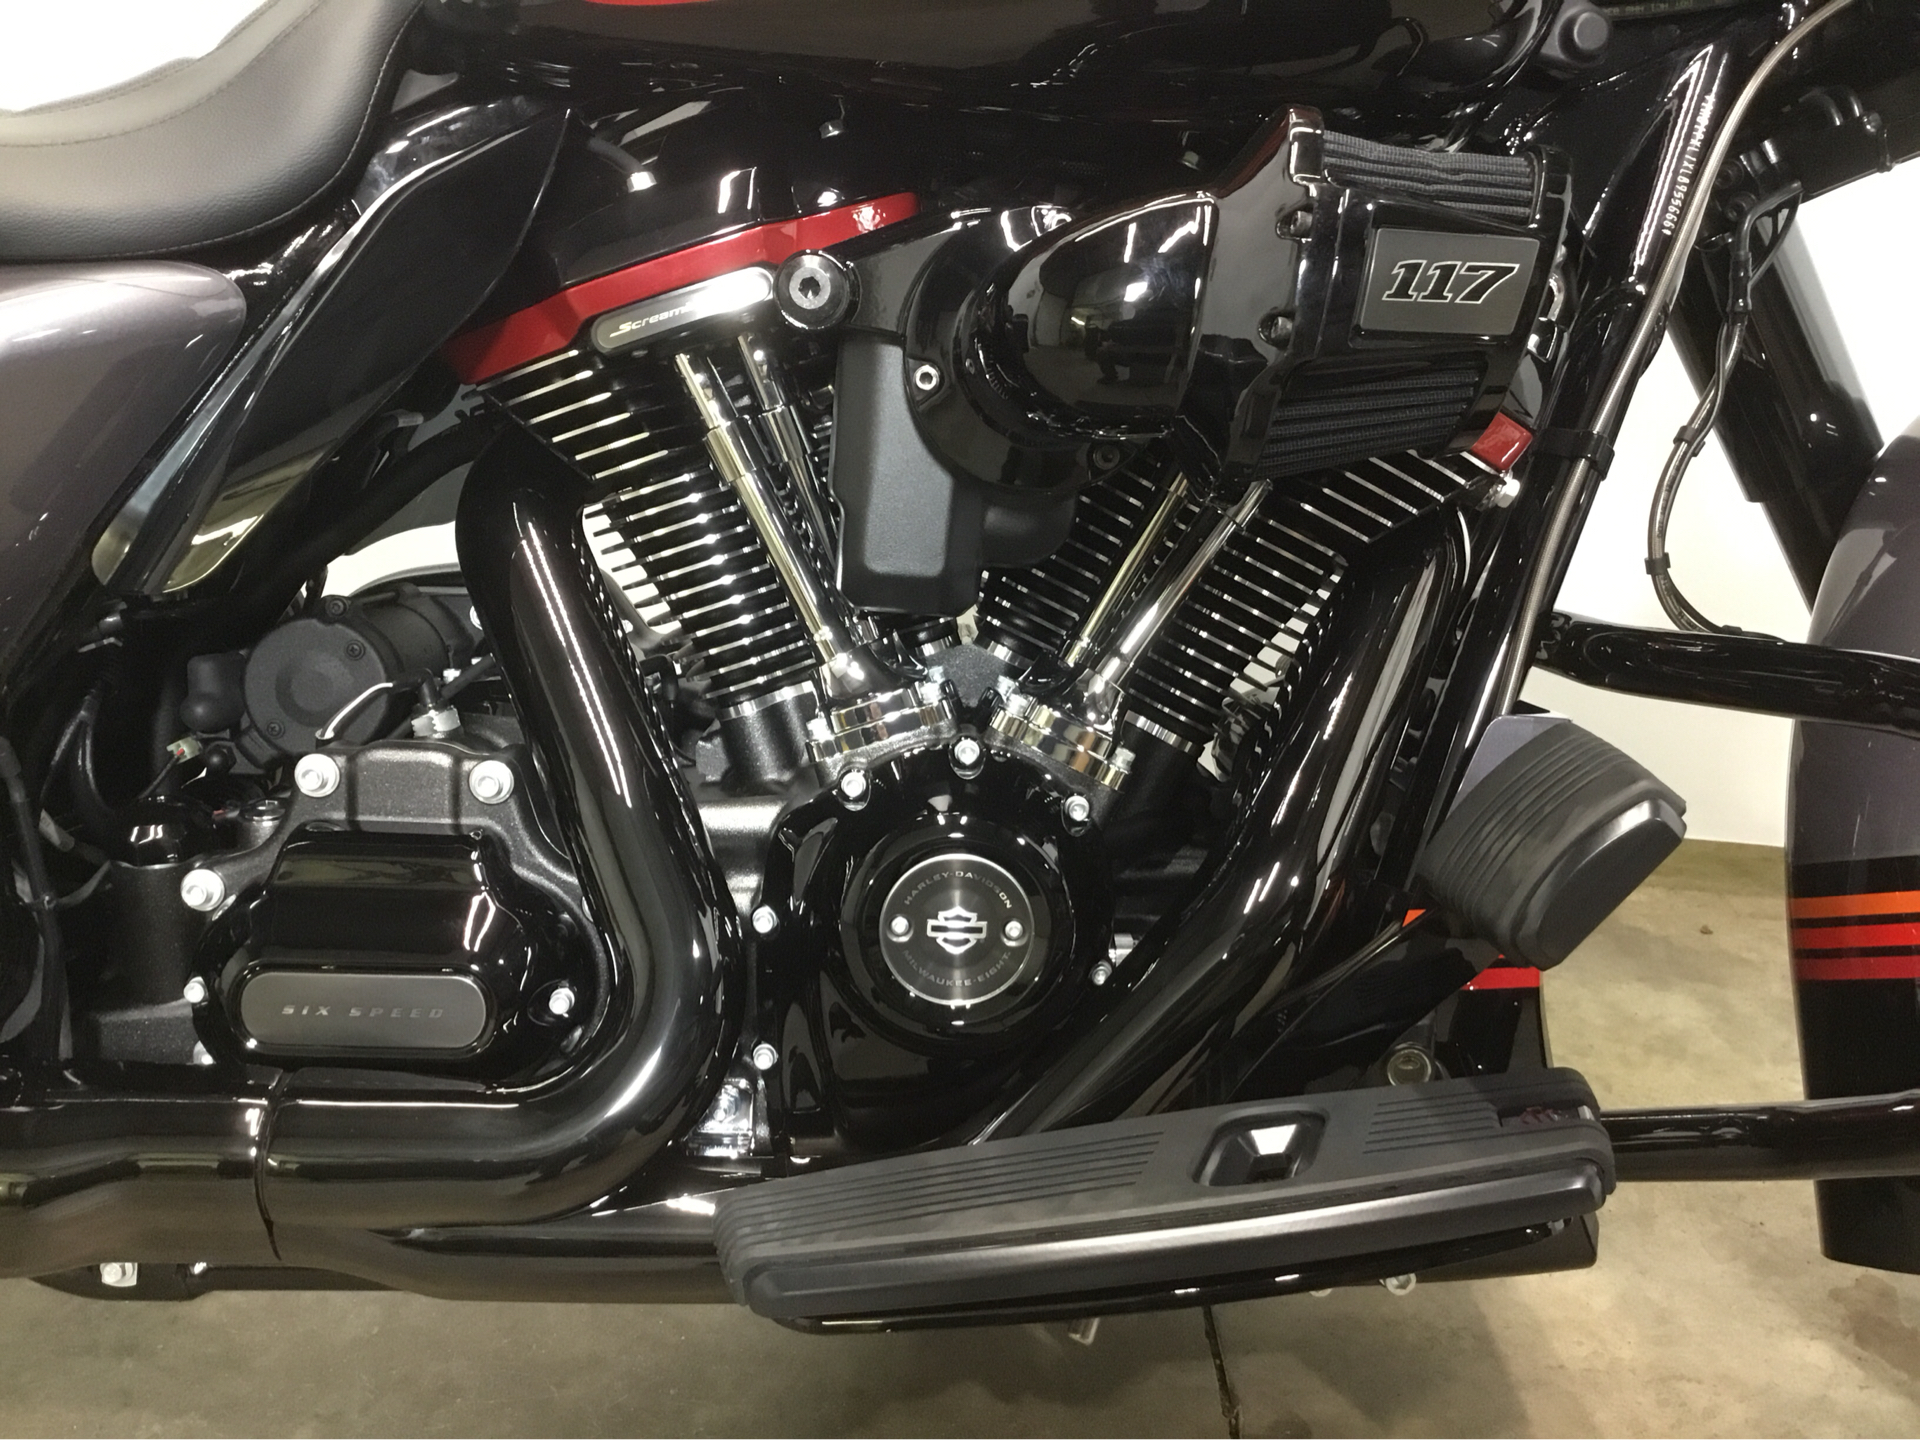 New 2020 Harley-Davidson CVO Street Glide FLHXSE